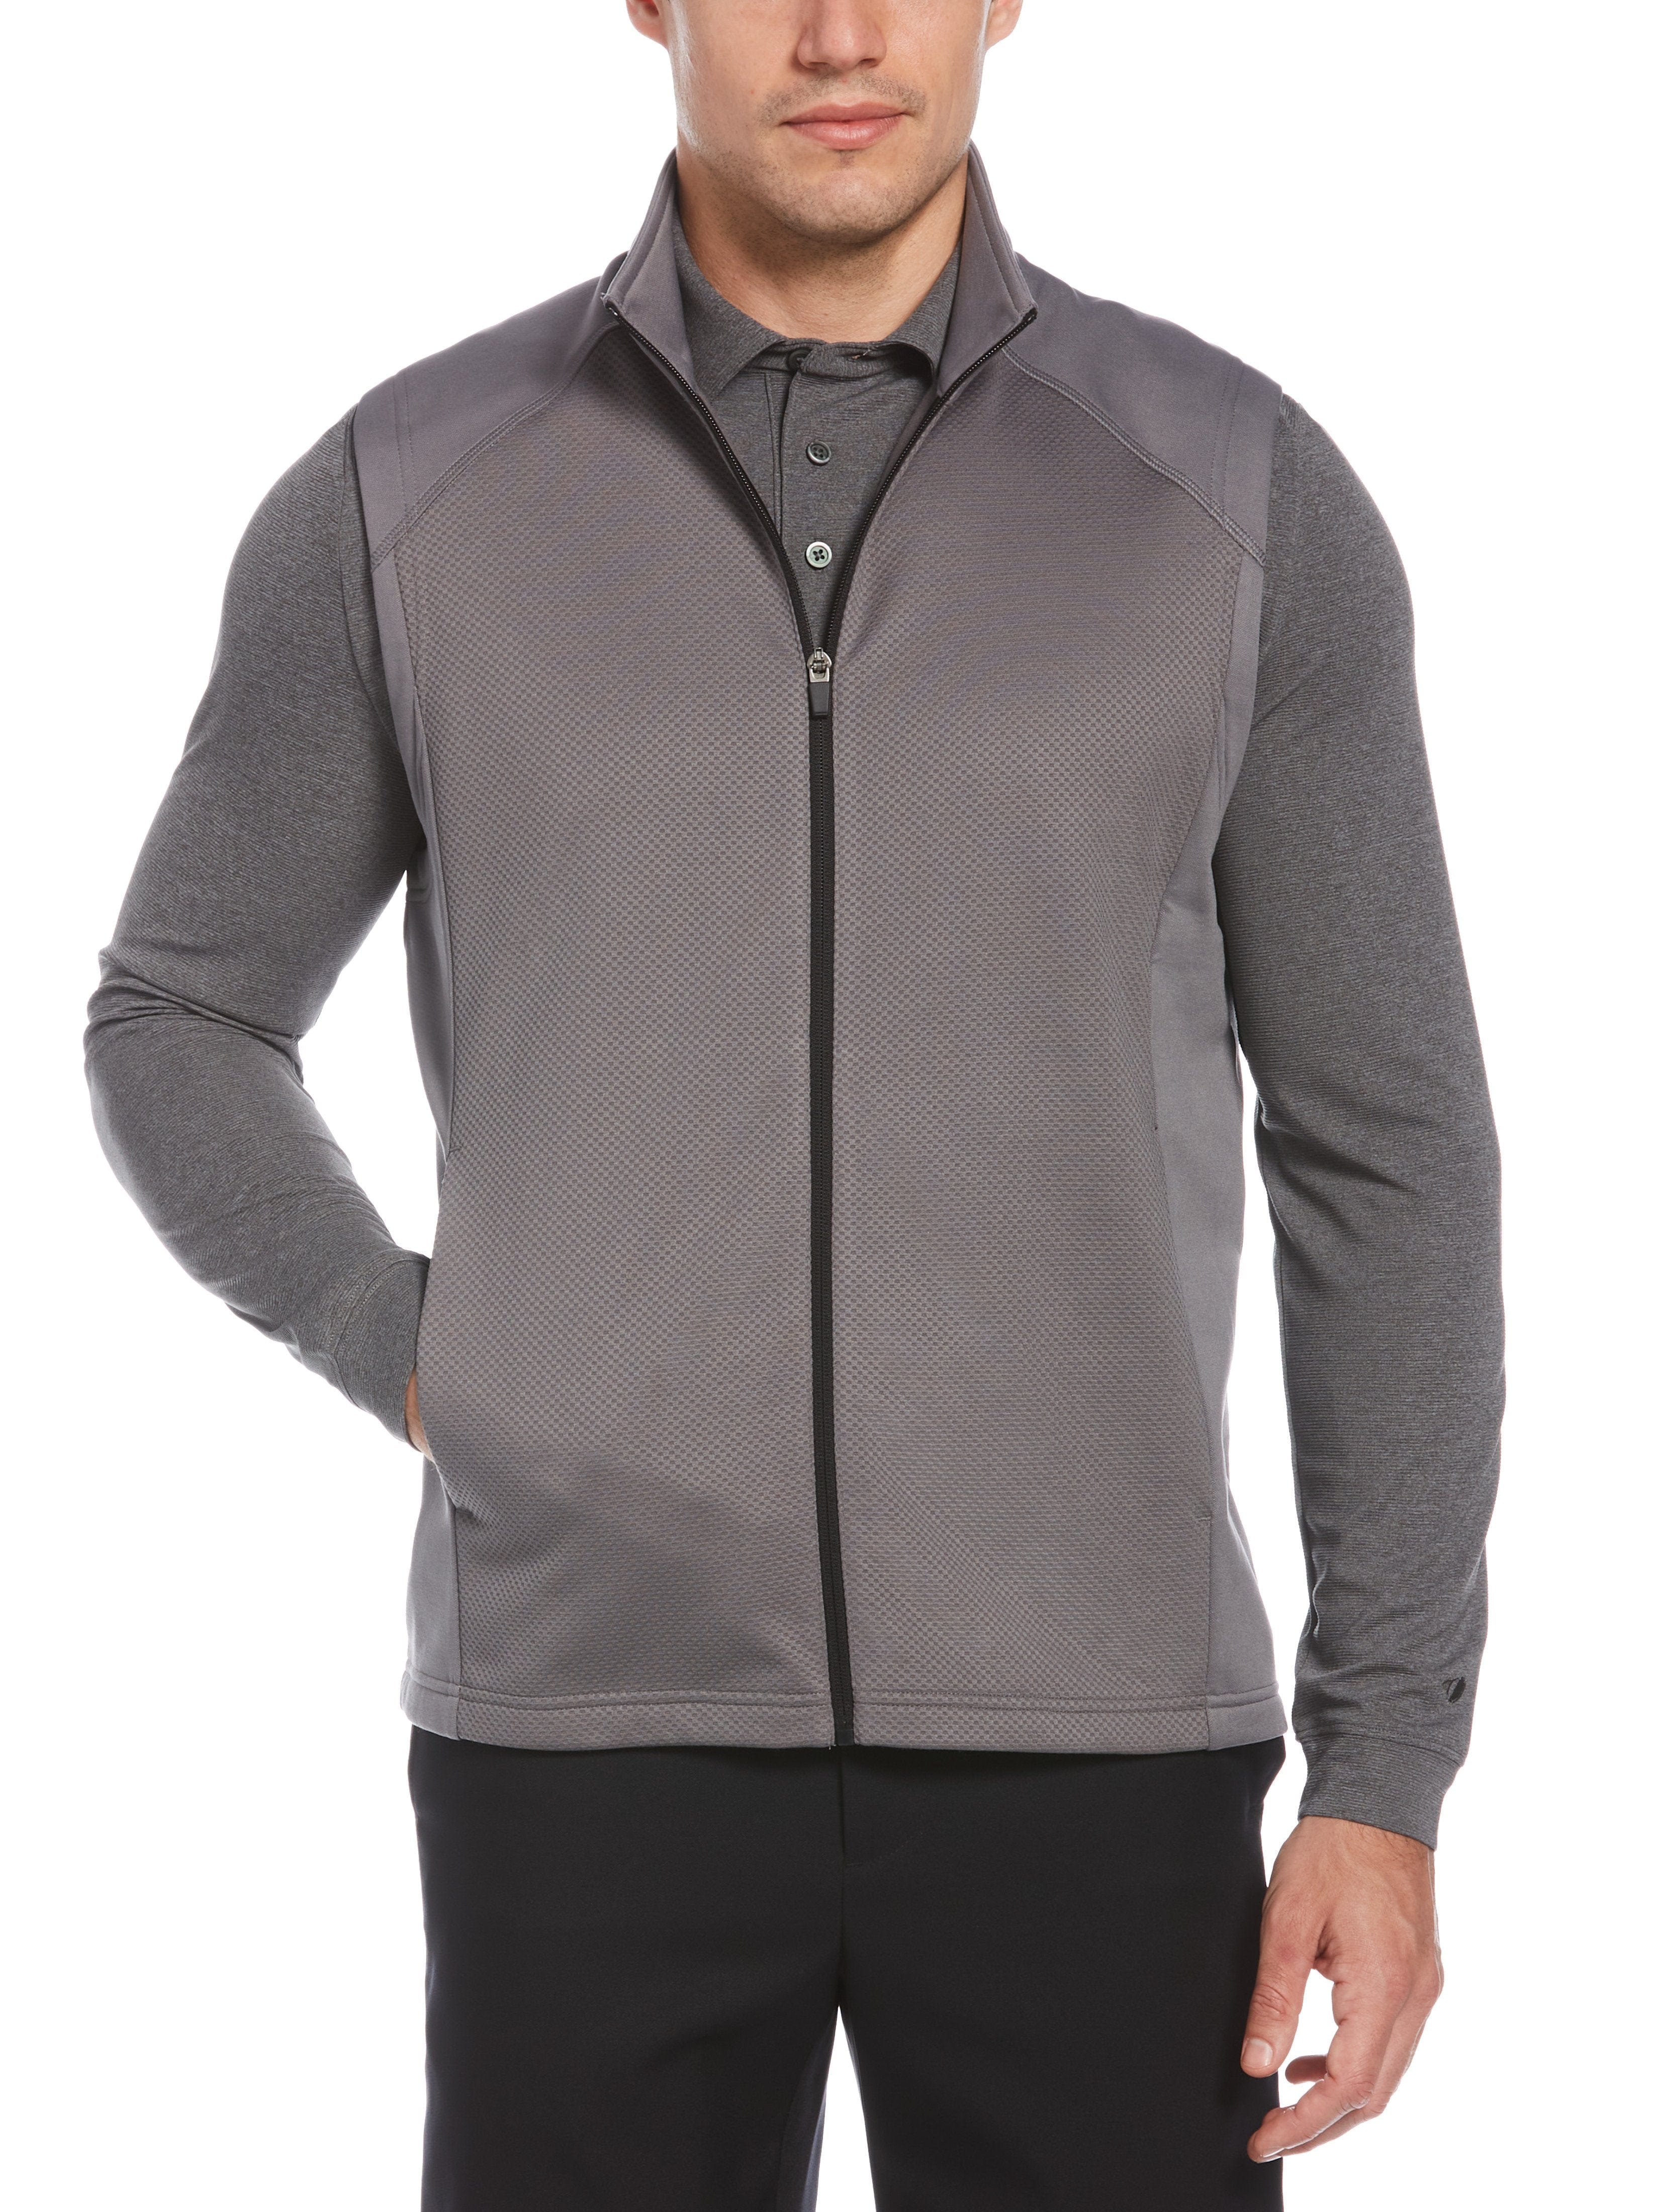 PGA TOUR Apparel Mens Mixed Texture Fleece Golf Vest Top, Size XL, Quiet Shade Gray, 100% Polyester | Golf Apparel Shop